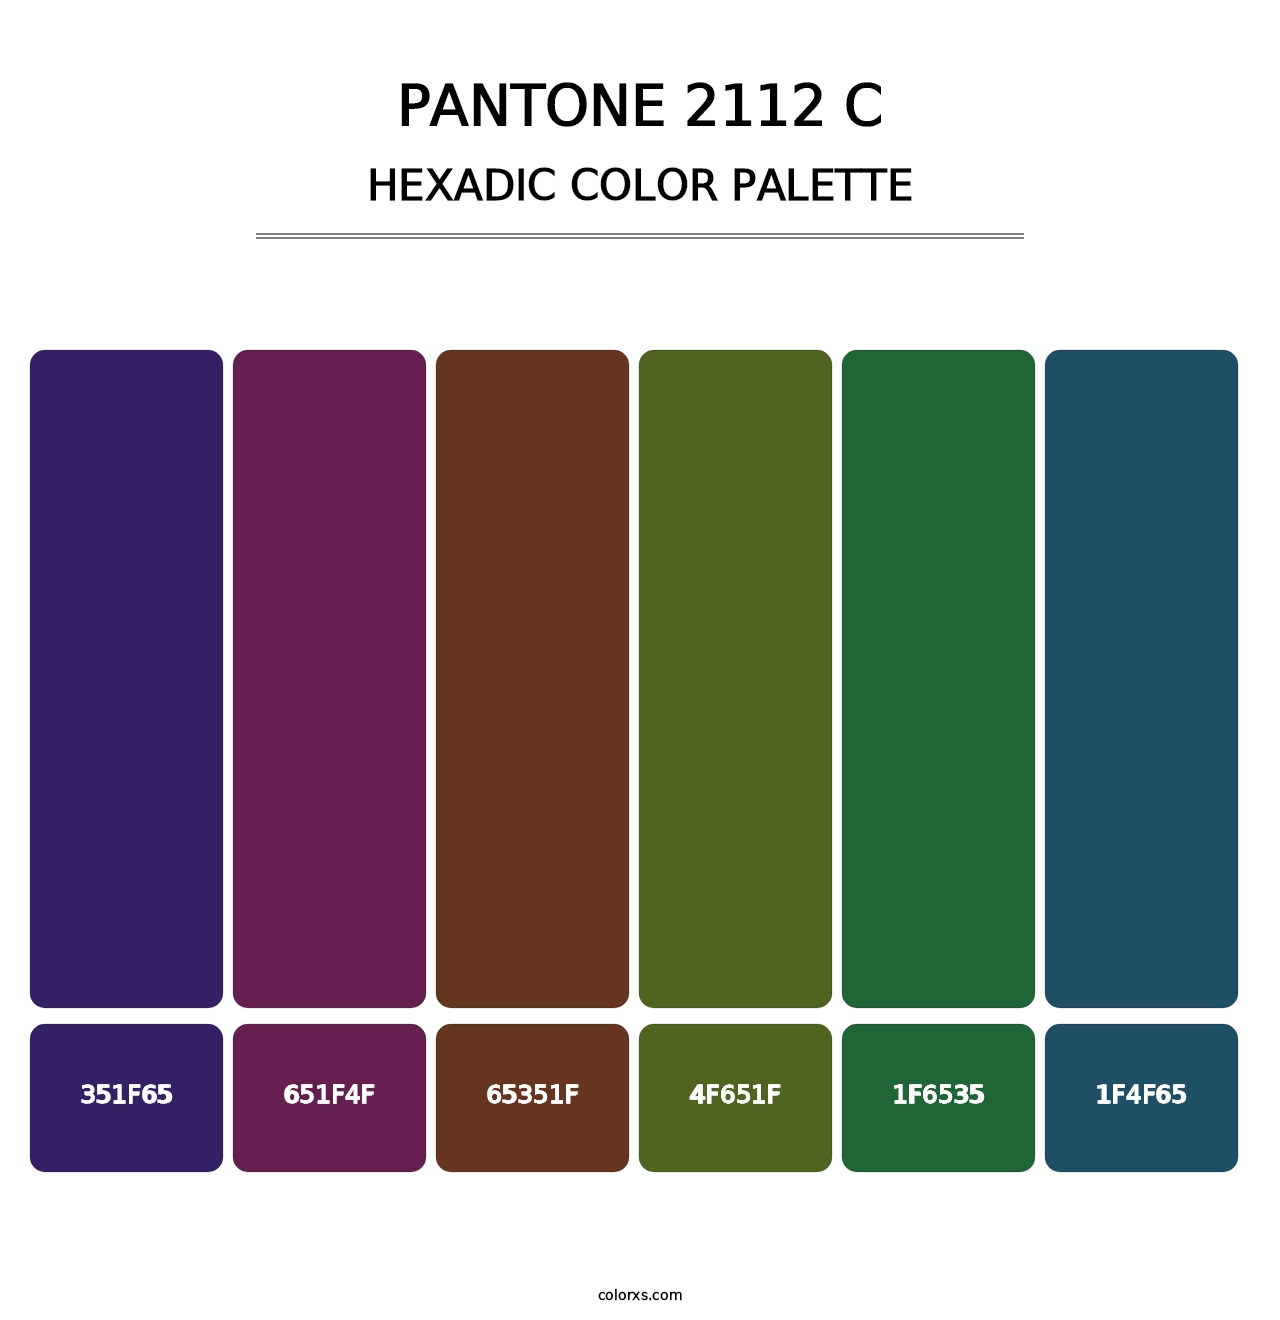 PANTONE 2112 C - Hexadic Color Palette